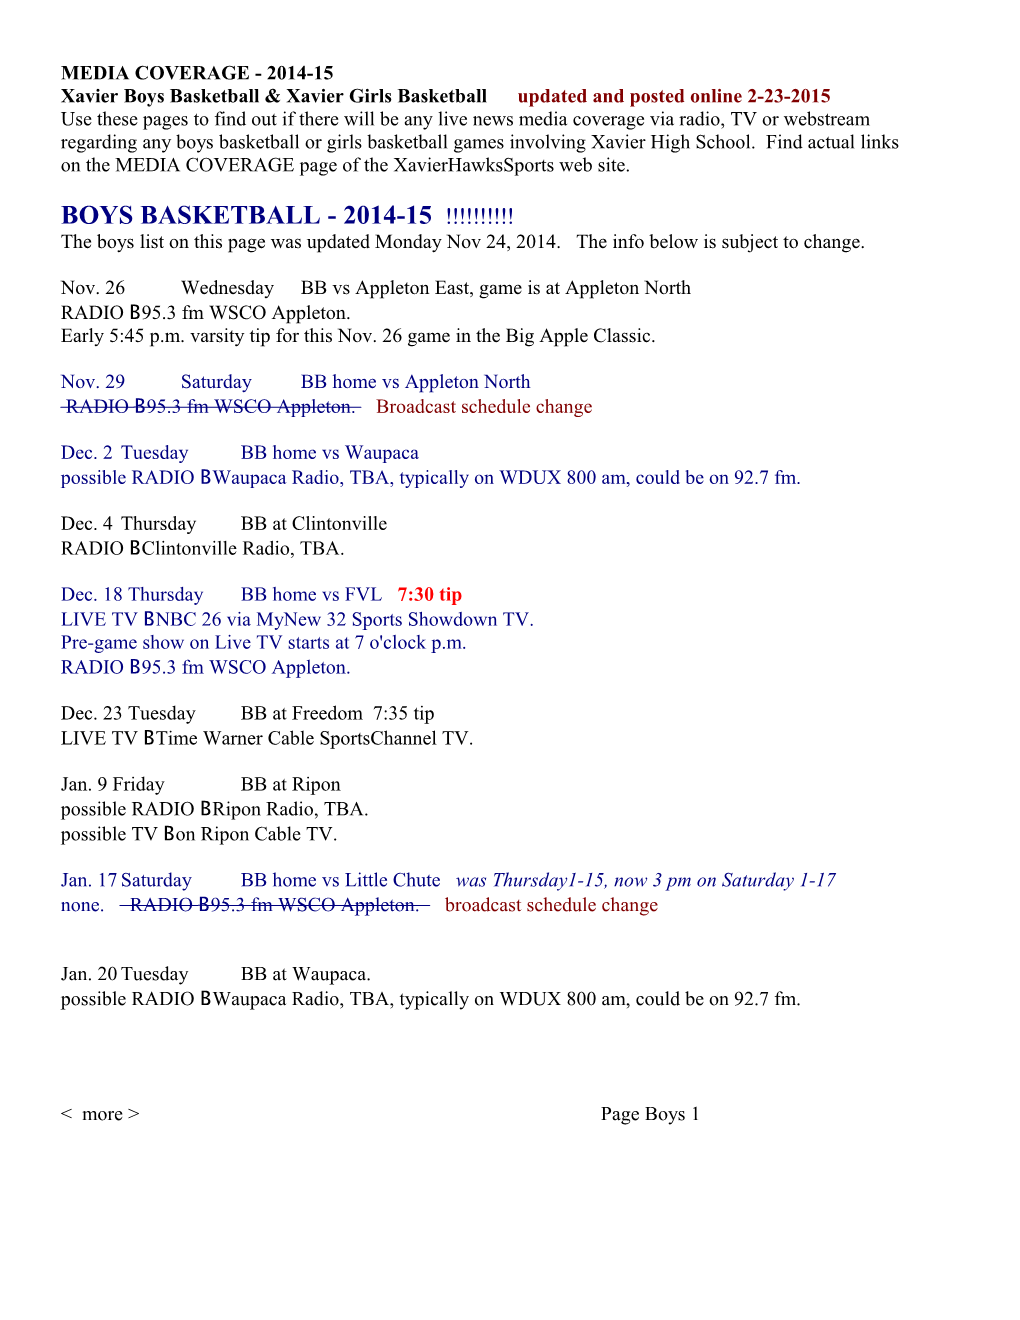 Xavier Boys Basketball & Xavier Girls Basketball Updated and Posted Online 2-23-2015